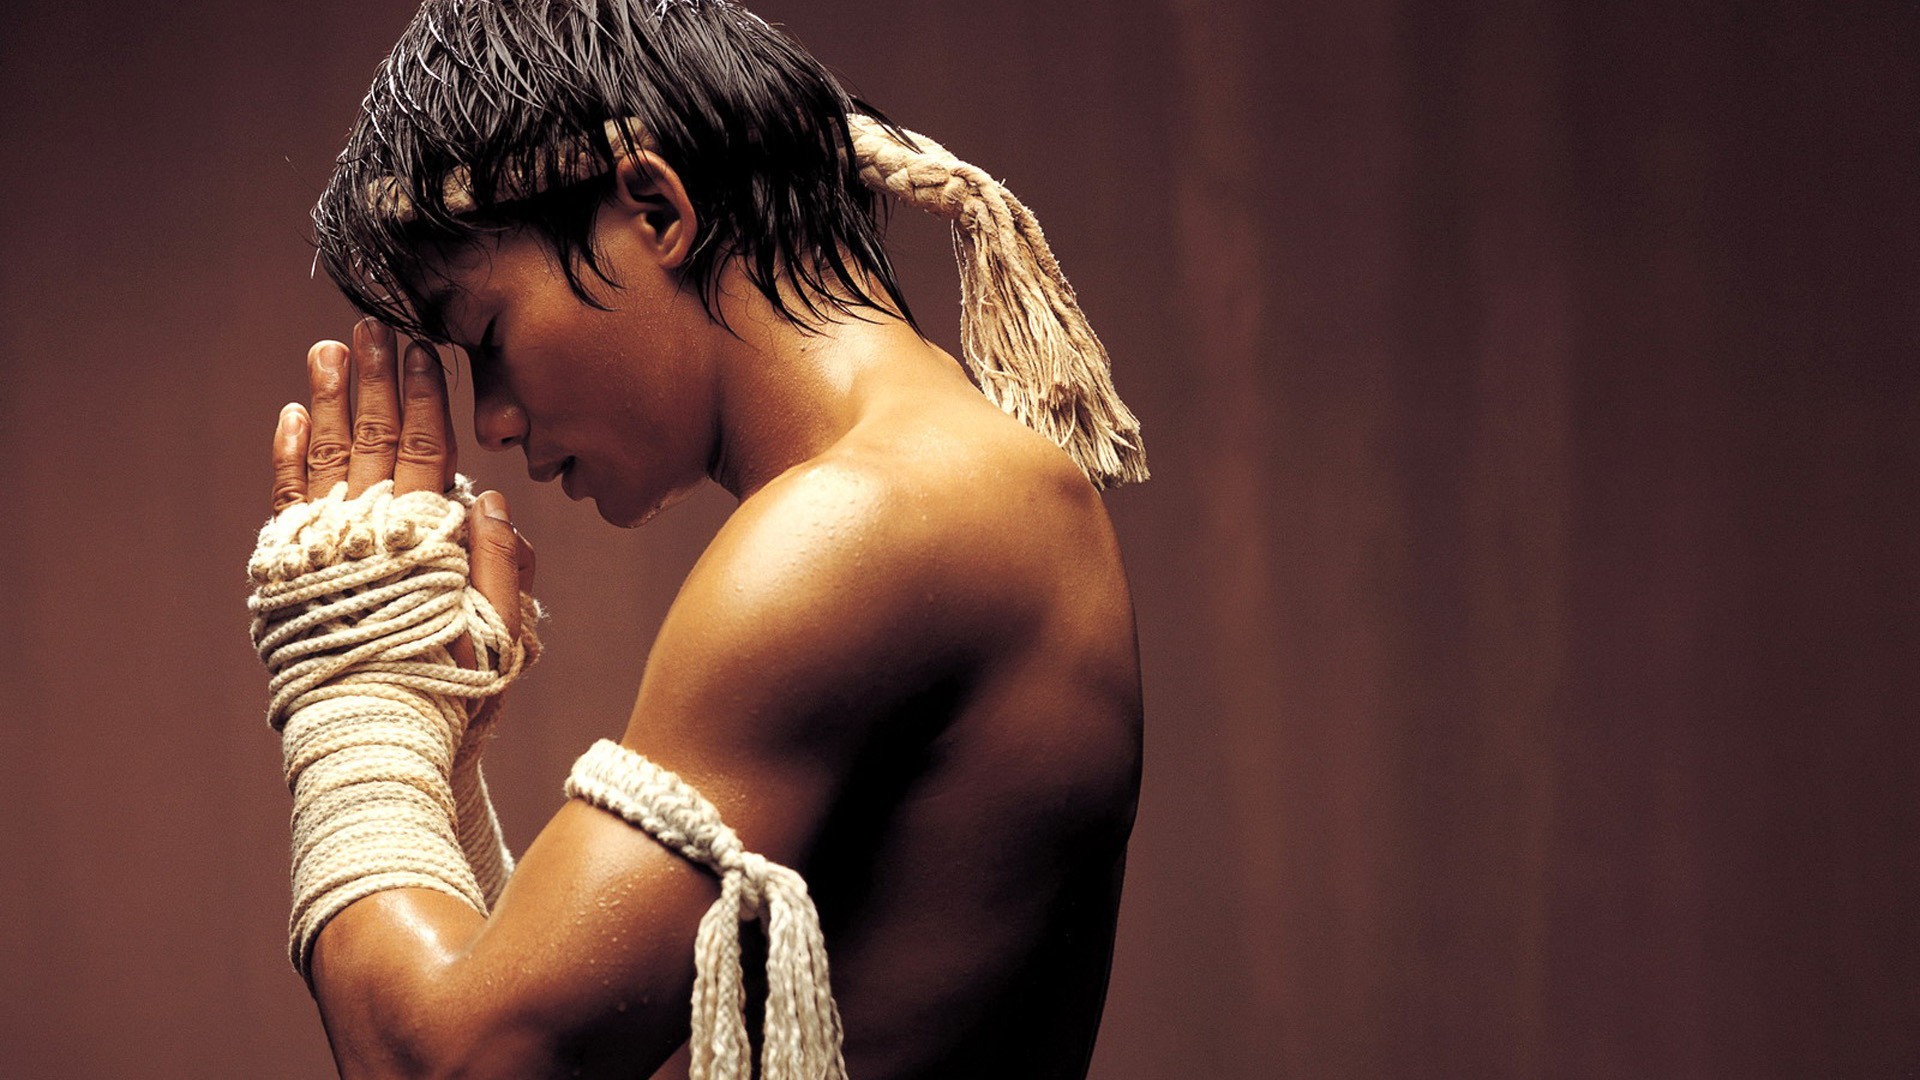 Tony Jaa Actor Men Movies Shirtless Praying Headband Sweat Closed Eyes Ong Bak The Thai Warrior 1920x1080